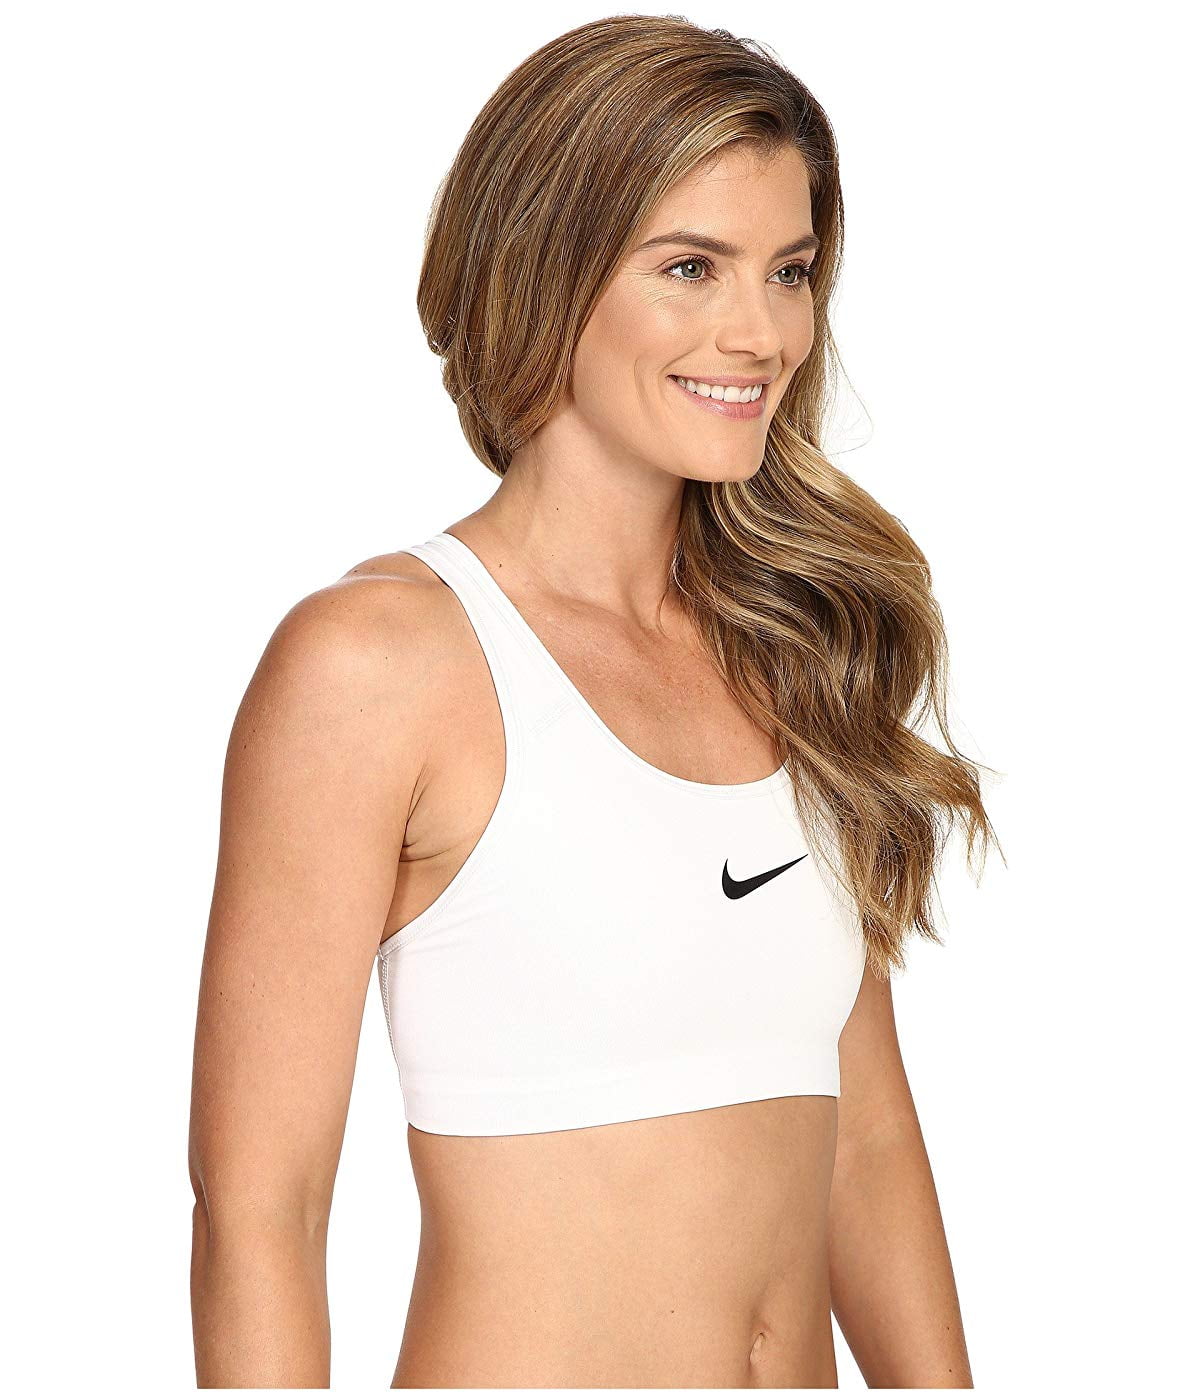 Nike 842398-100: Women's Swoosh White Sports Bra (L, White/Black)